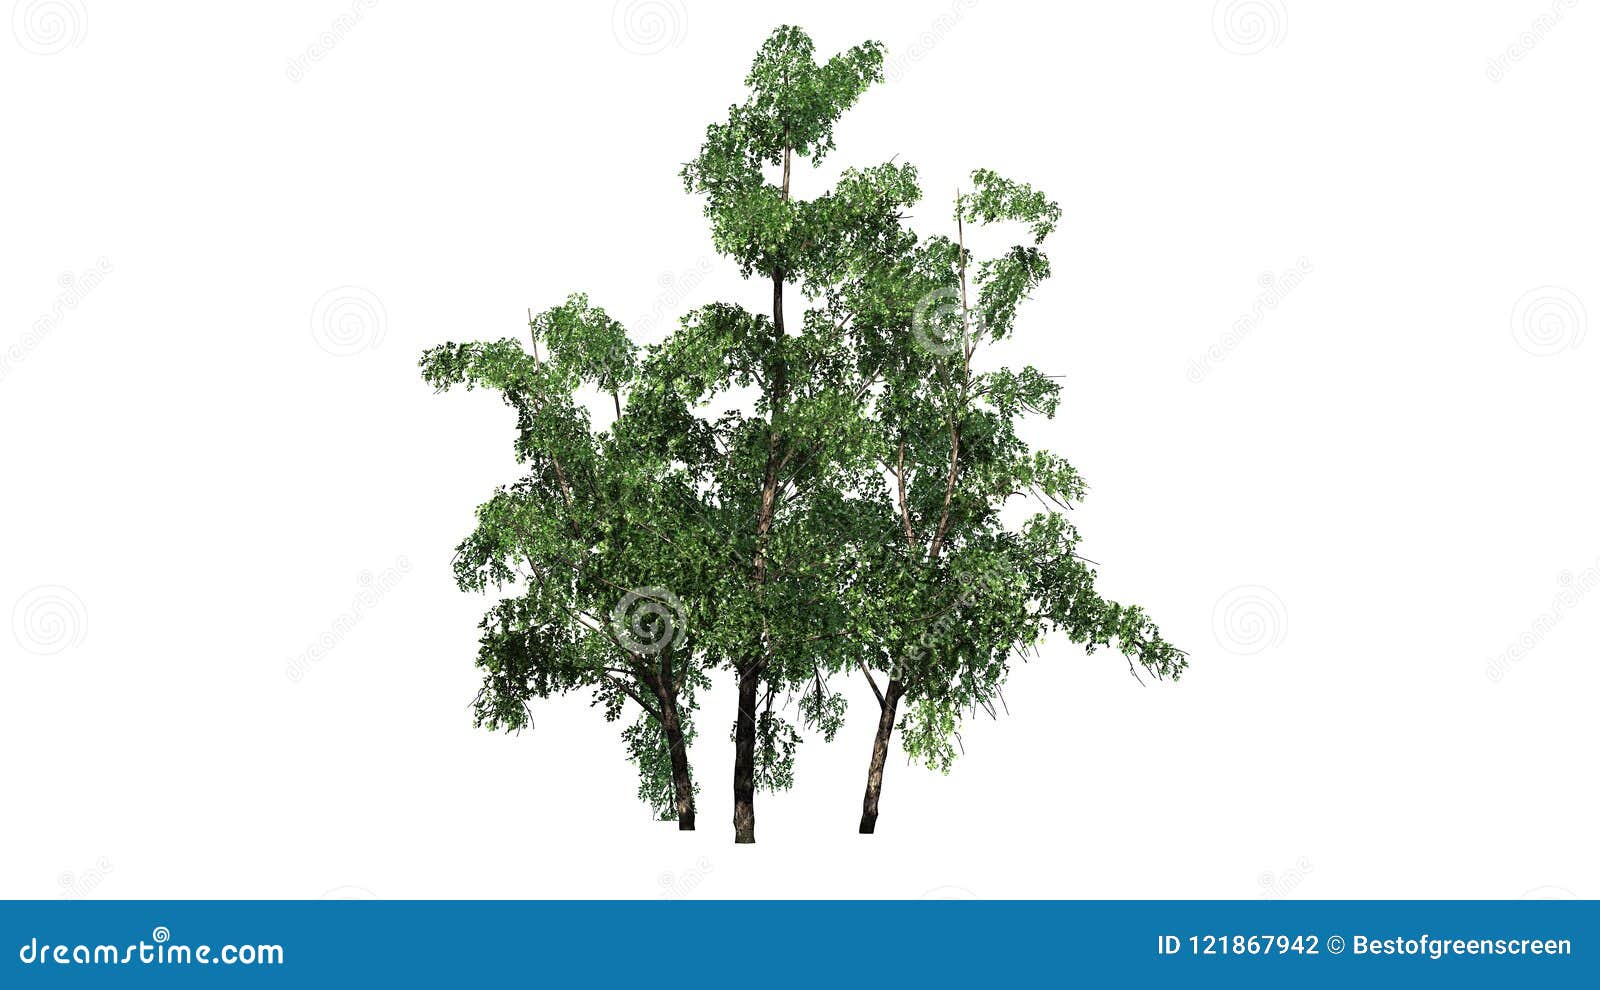 River birch trees stock photo. Image of green, illustration - 121867942